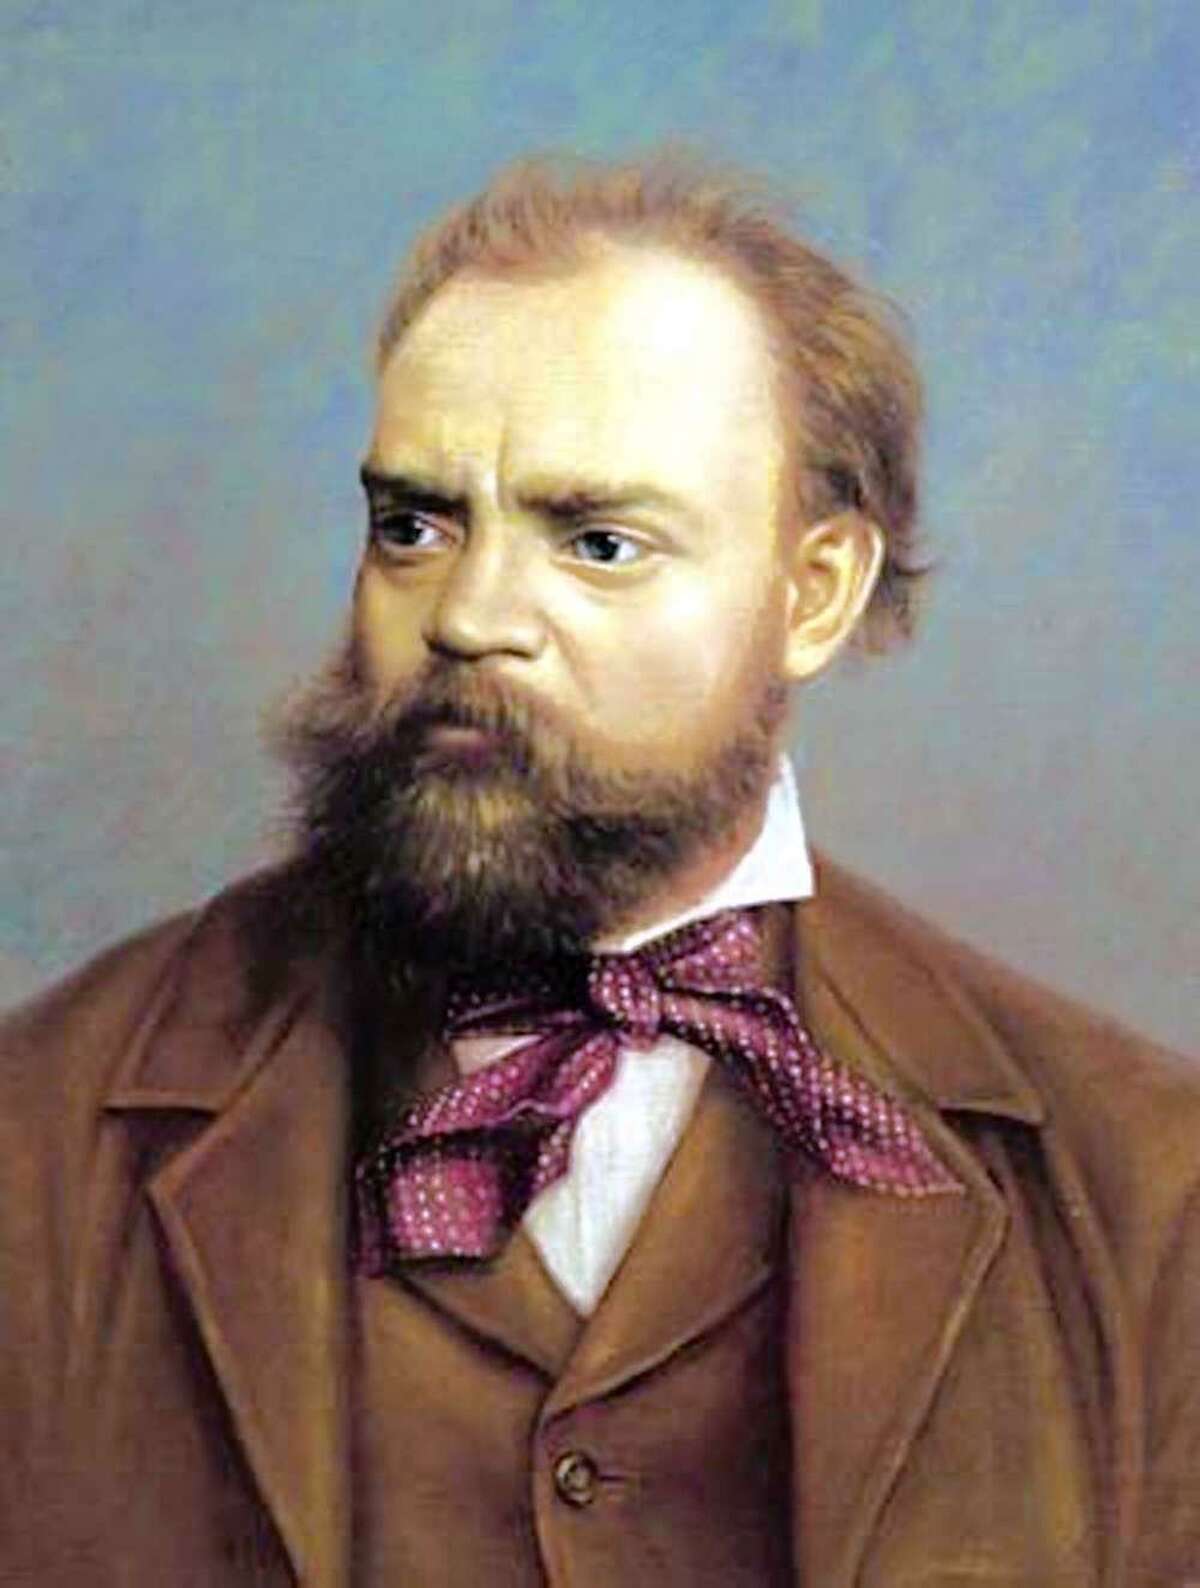 Composer Antonín Dvorák